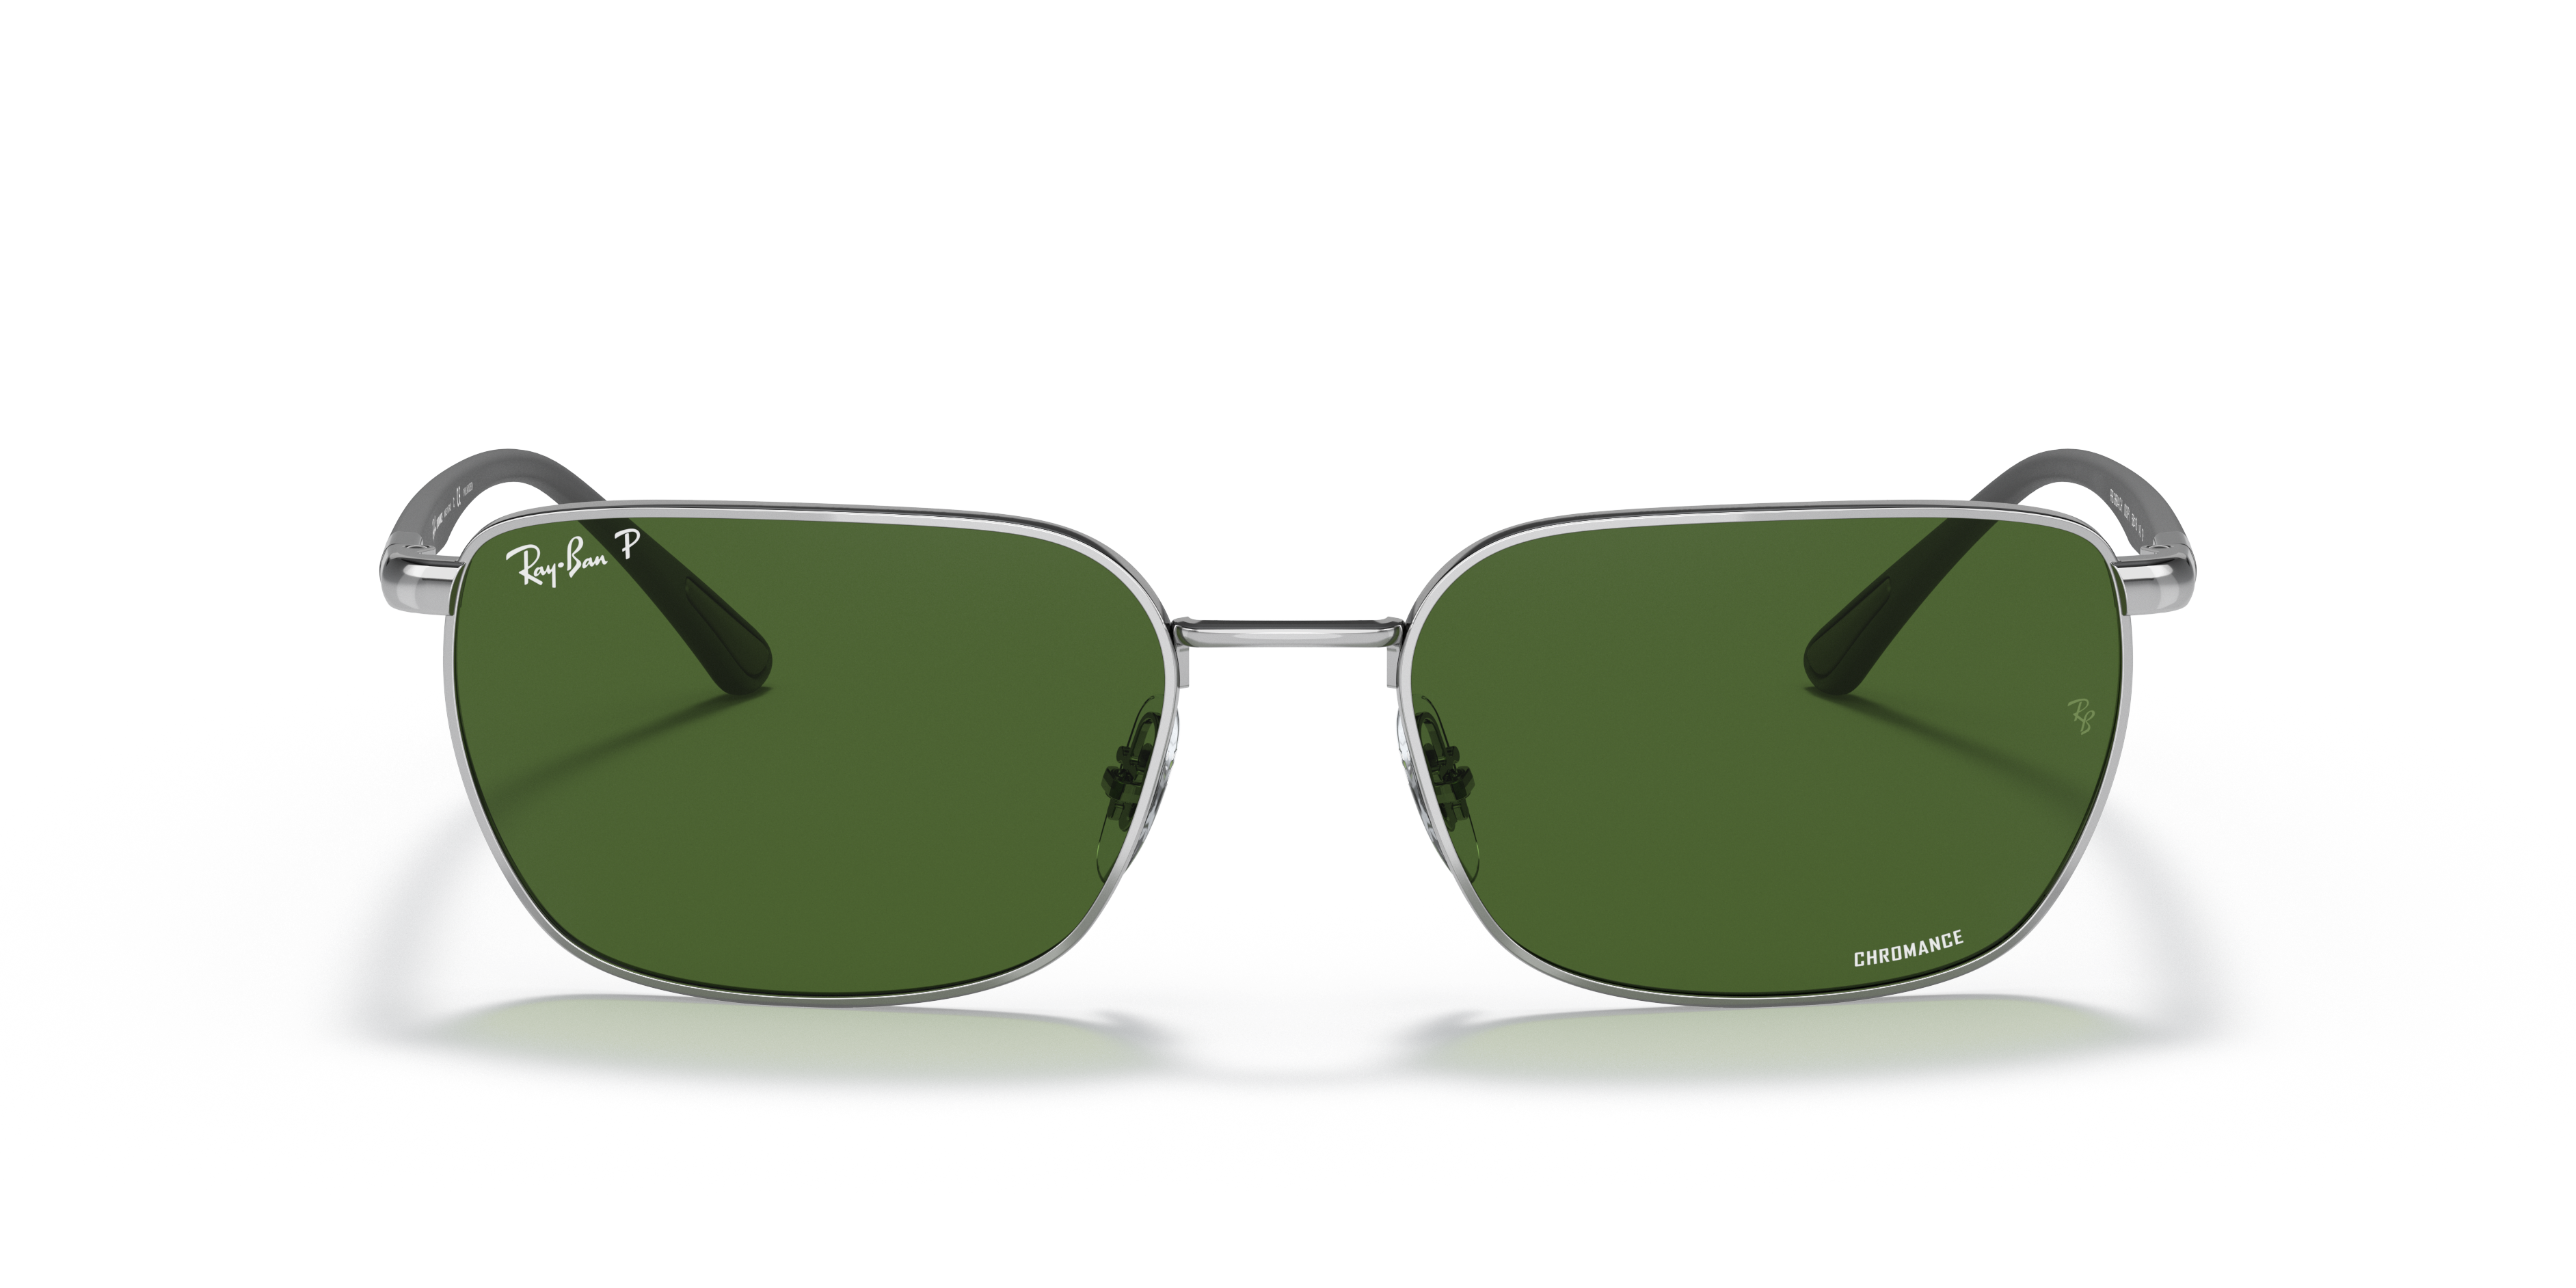 Ray-Ban Rb3684ch Chromance Sunglasses Grey Frame Green Lenses Polarized 58-18 Womens Sunglasses Ray-Ban Sunglasses 